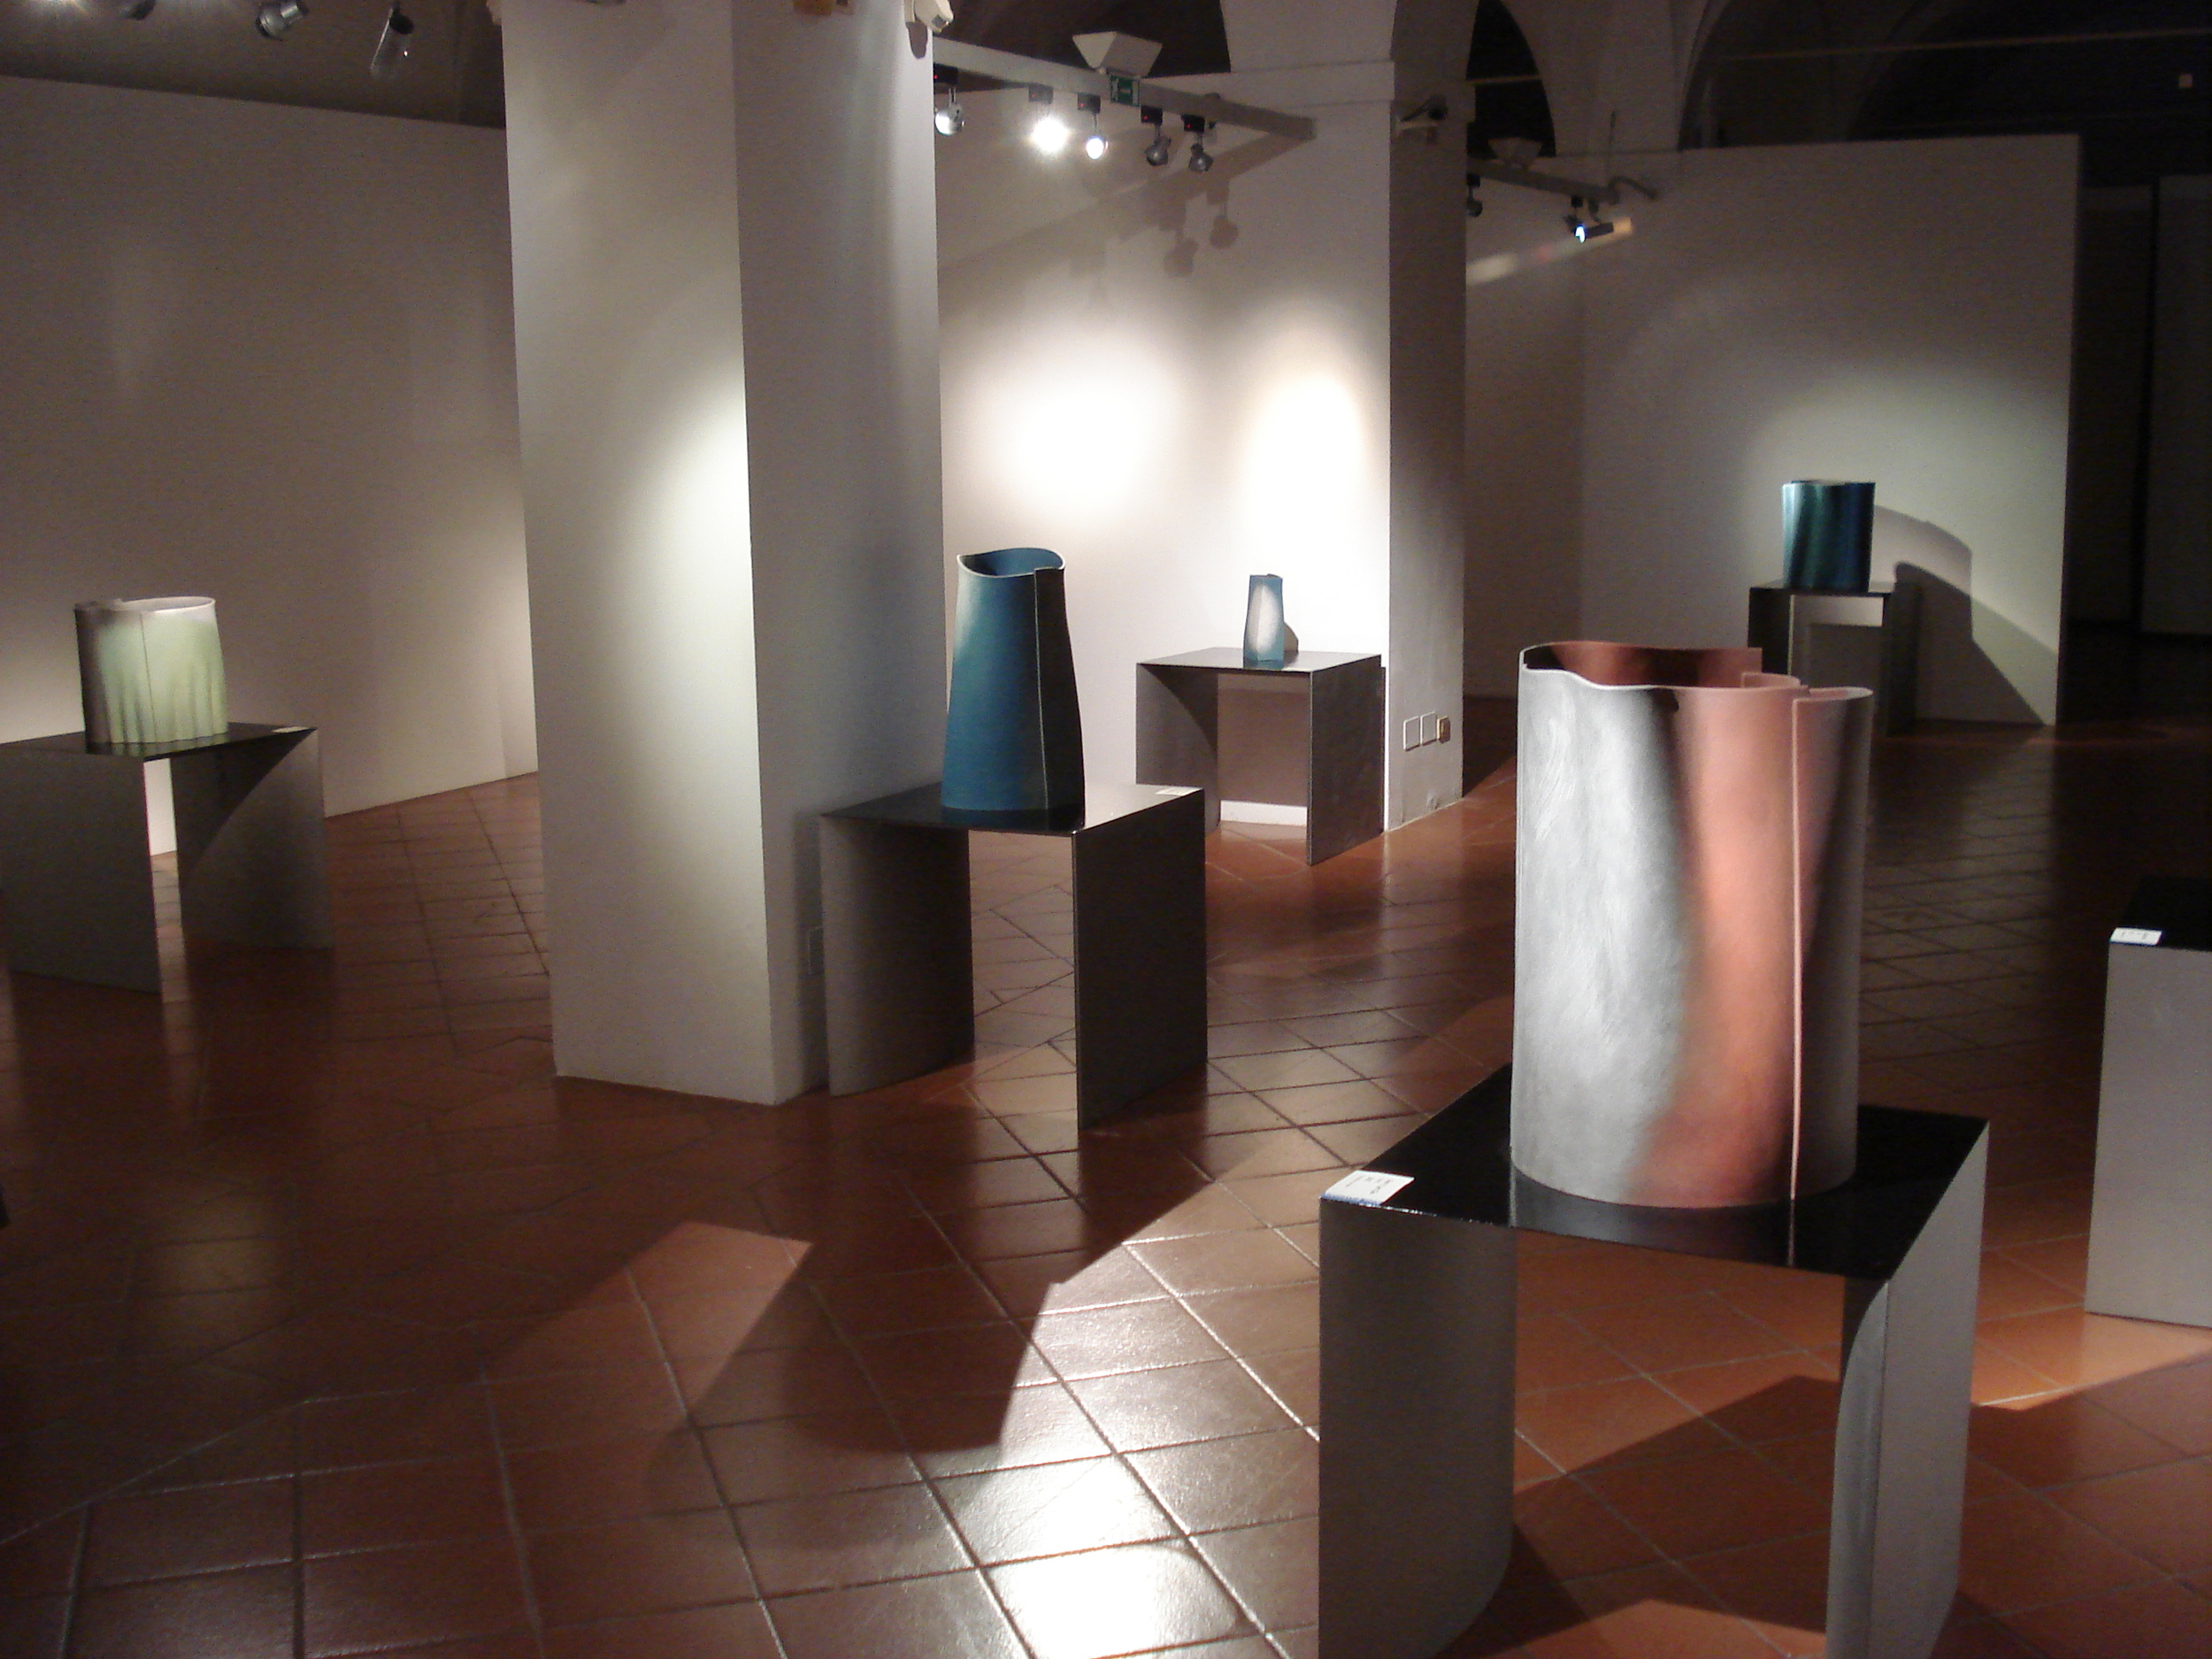 'I maestri del concorso' International Museum of Ceramics Faenza, Italy 2009